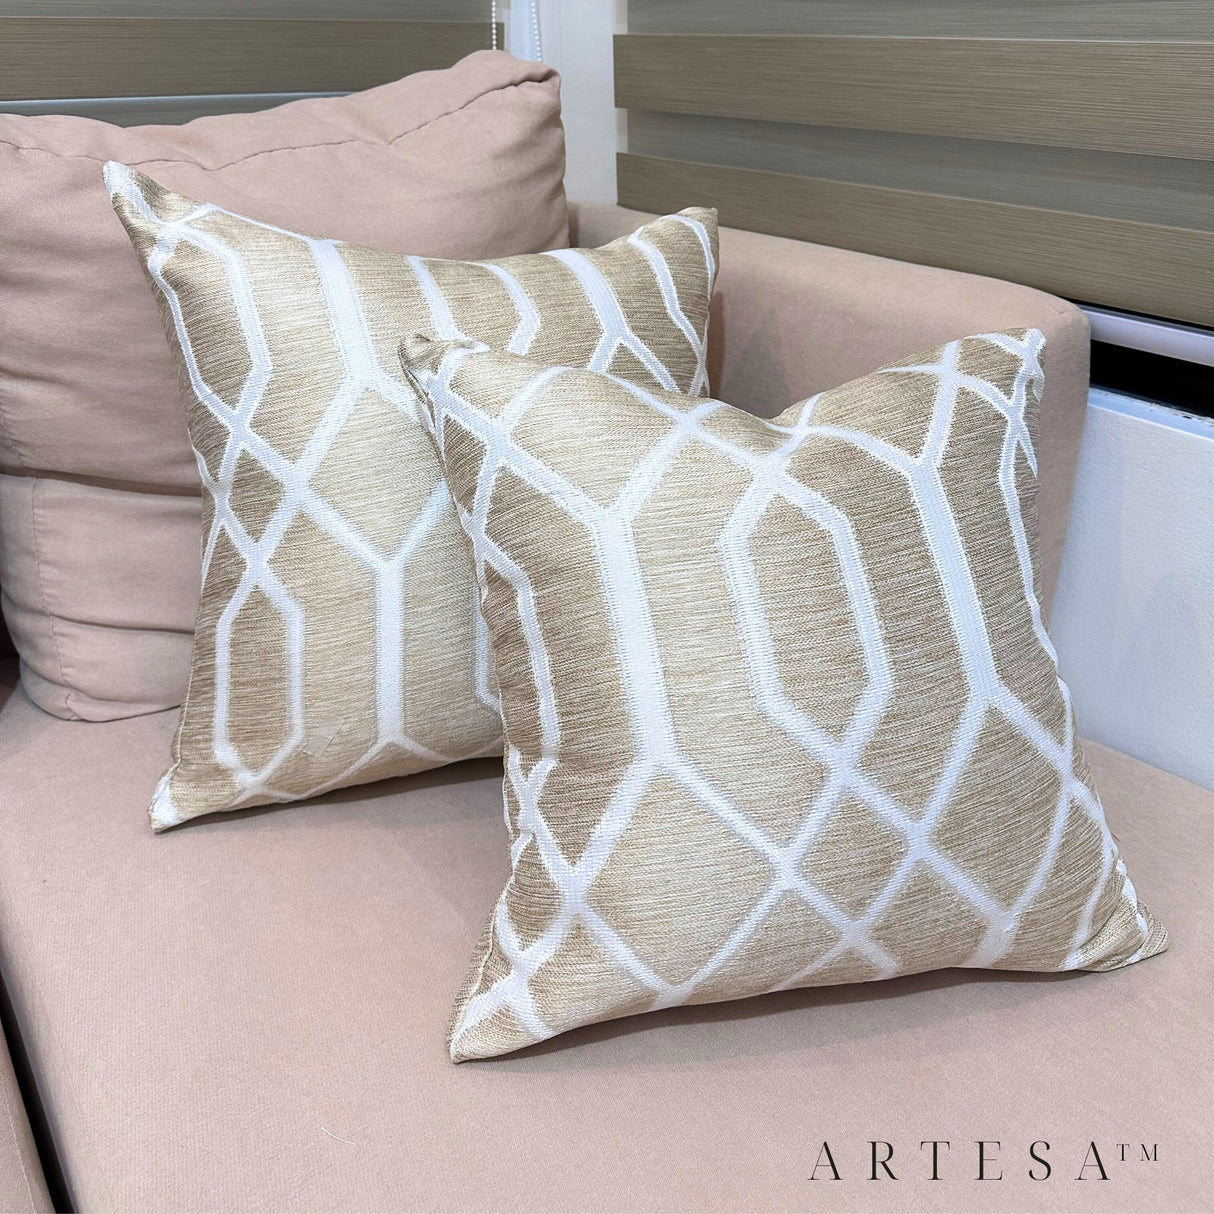 Artesa Pacita Premium Stretch Cotton Brocade Throw Pillow Cover with hidden zipper closure - Elegant Home Decor Accent